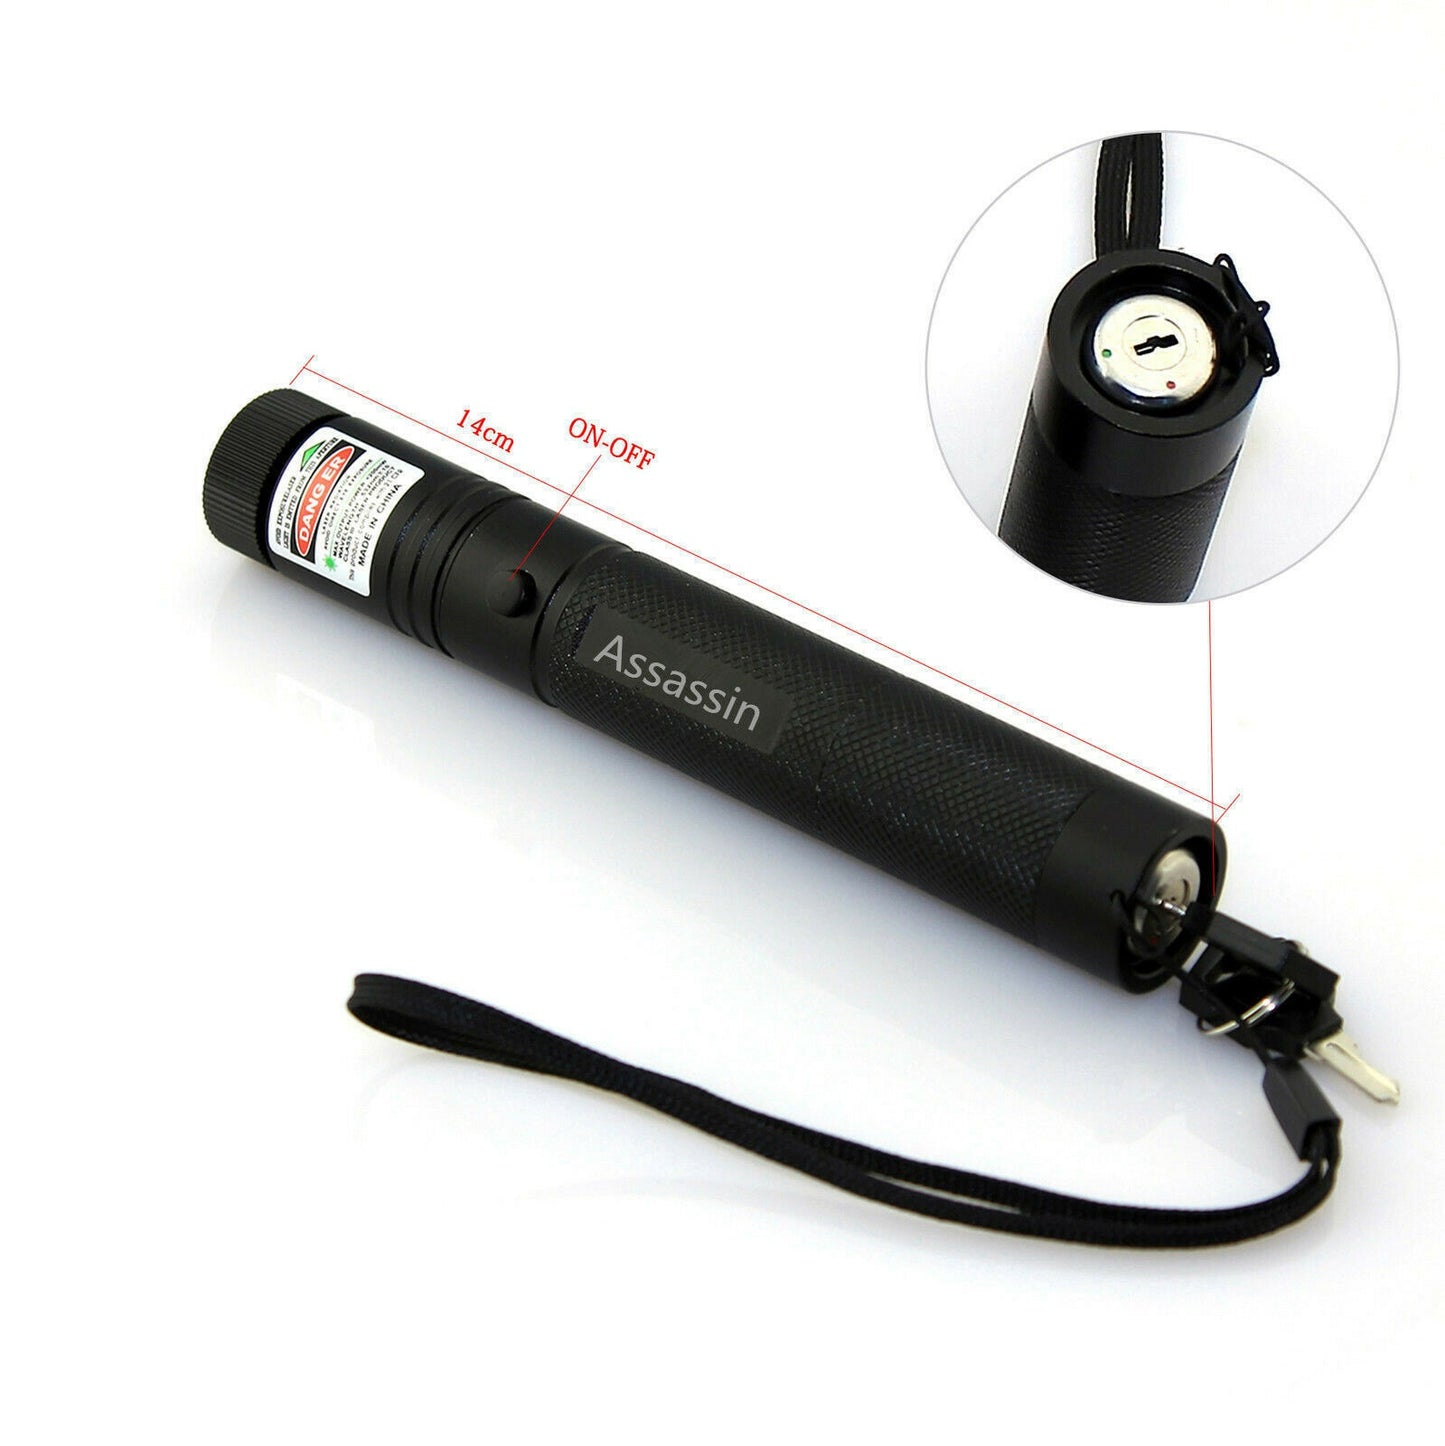 900Miles 1mw Green Laser Pointer Pen 532nm Lazer Beam Light Water Resistant